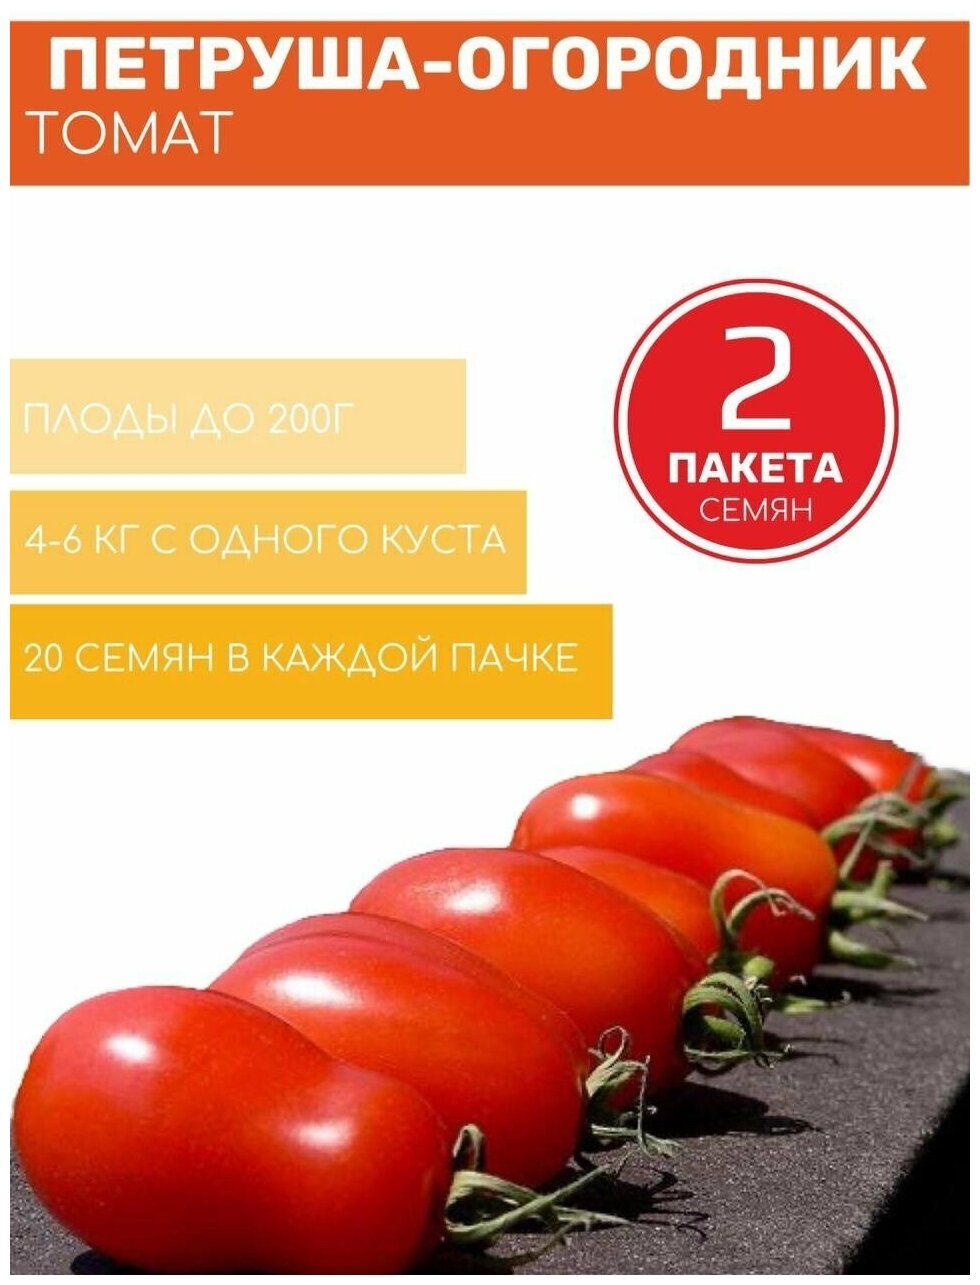 Томат Петруша-Огородник 2 пакета по 20шт семян